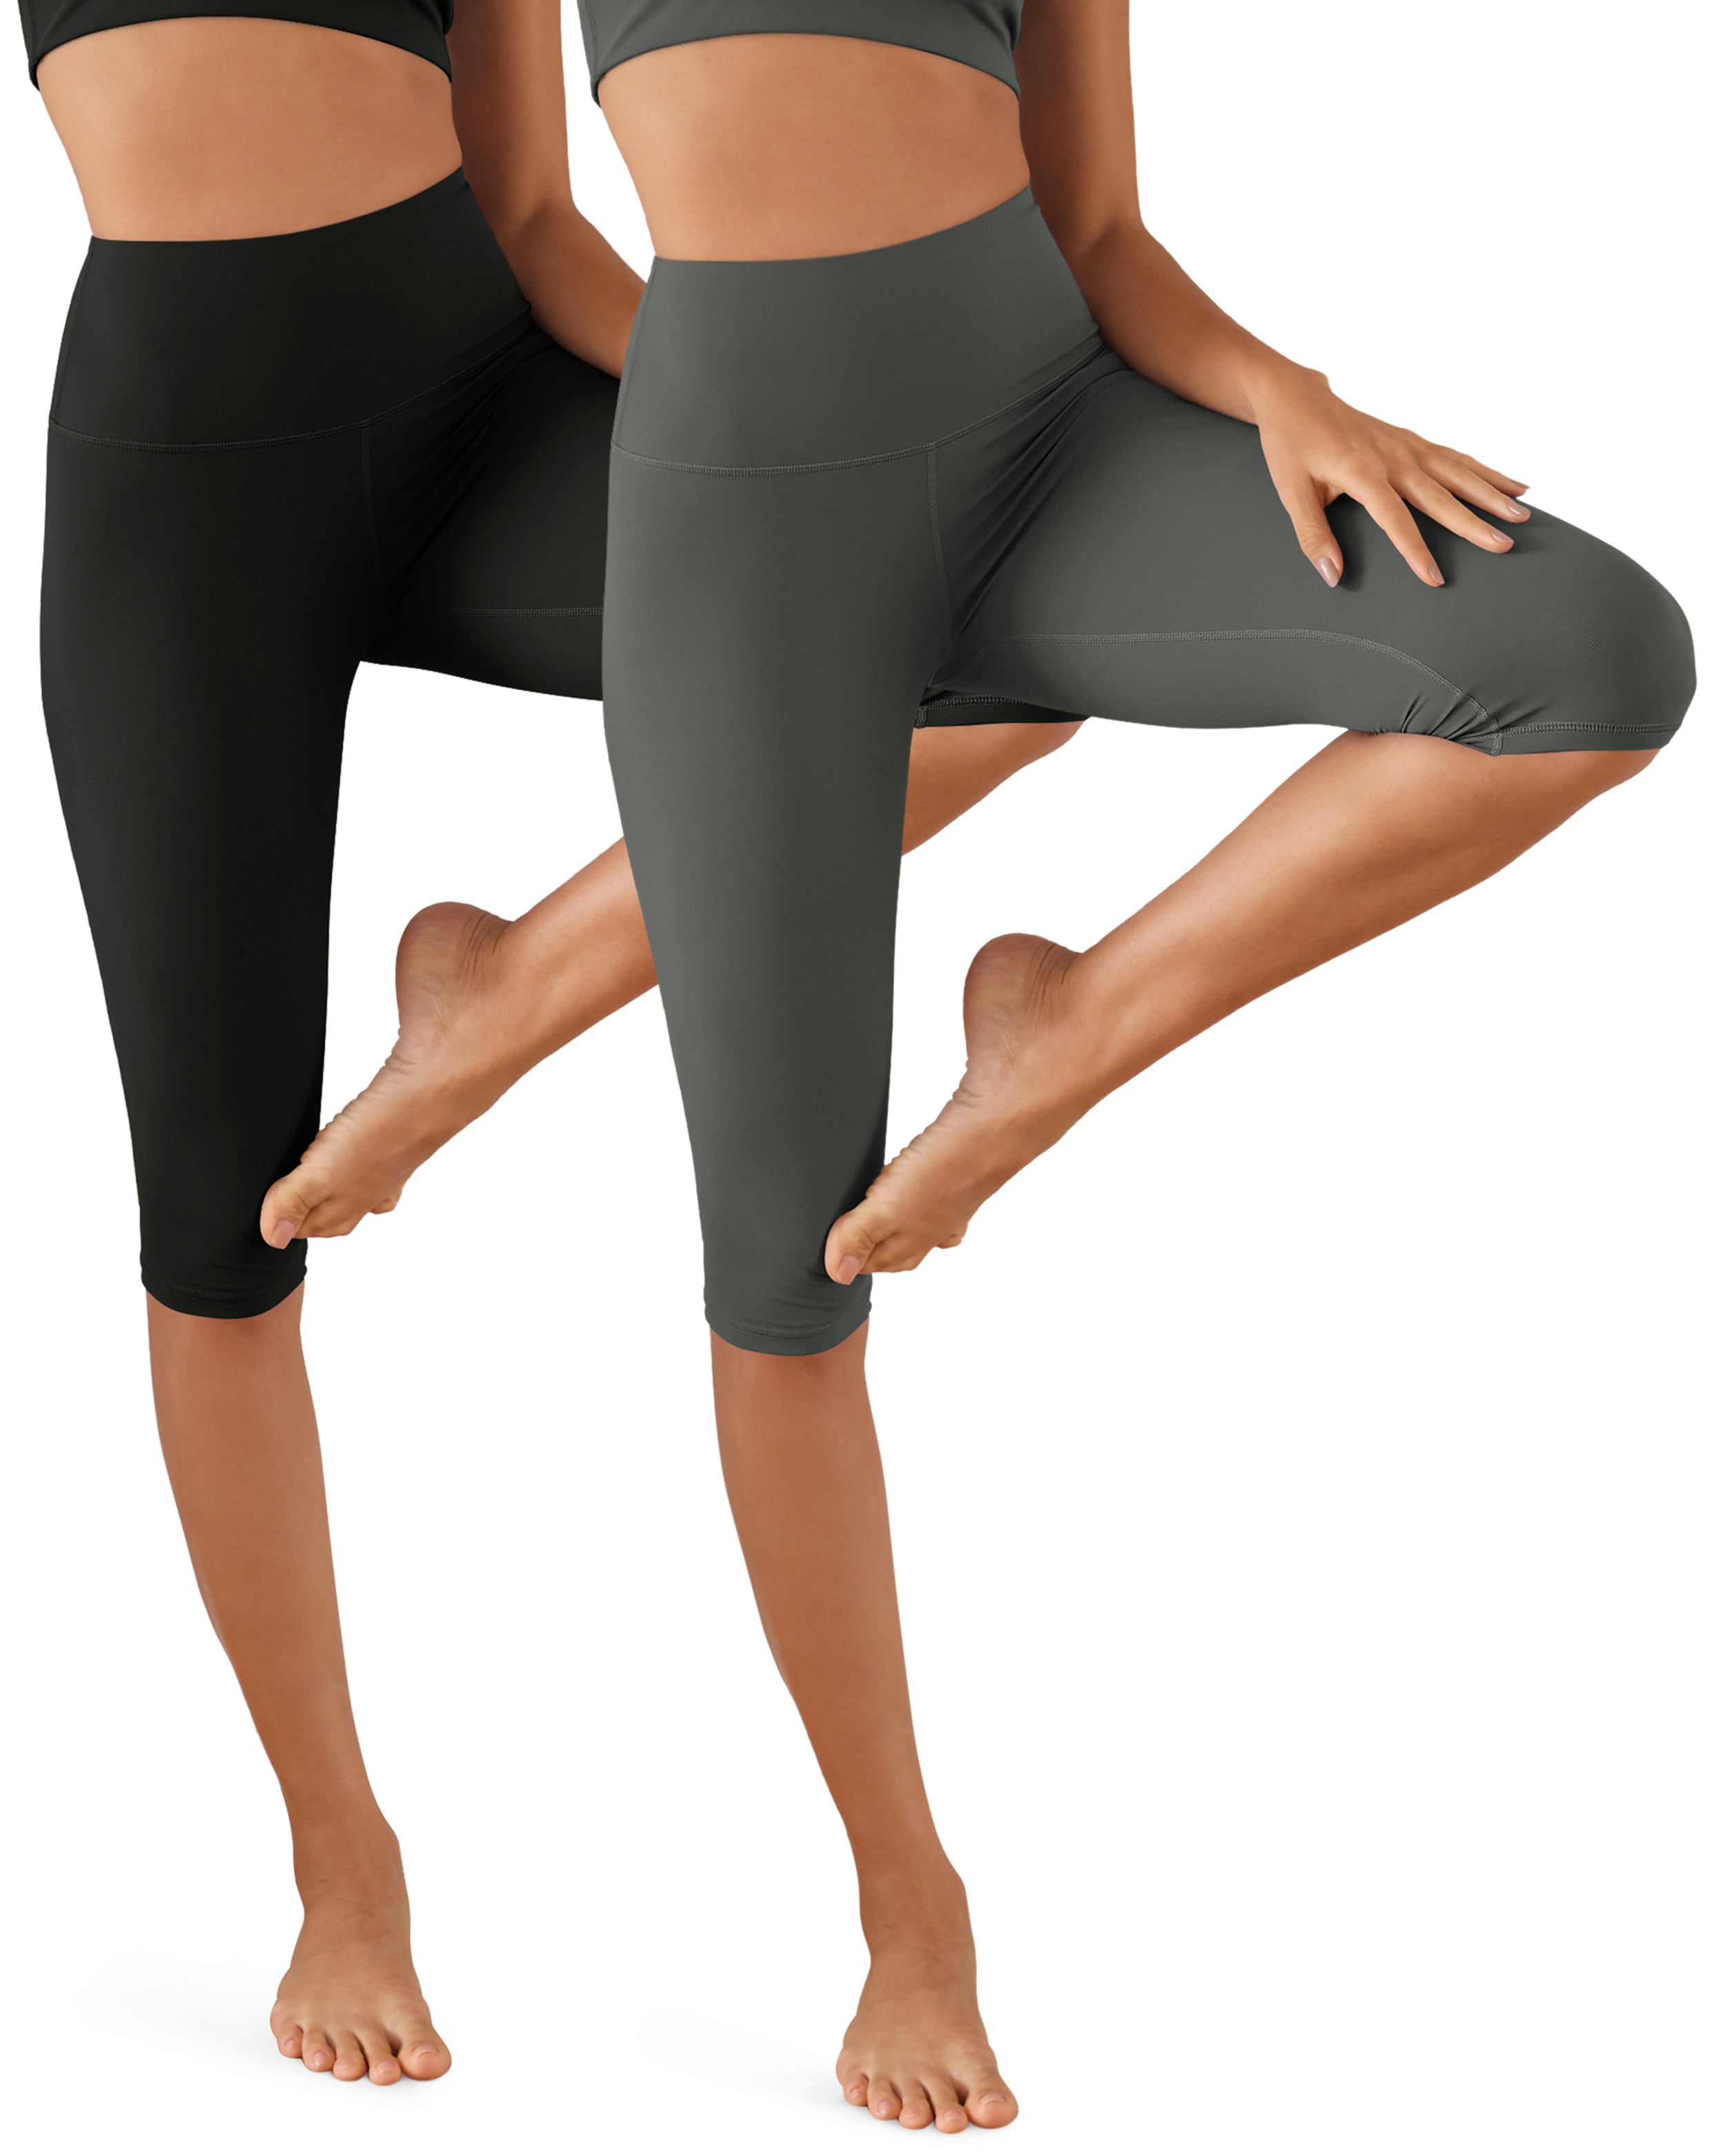 ODCLOUD 2-Pack High Waist Yoga Capris - Knee Length Black+Charcoal - ododos